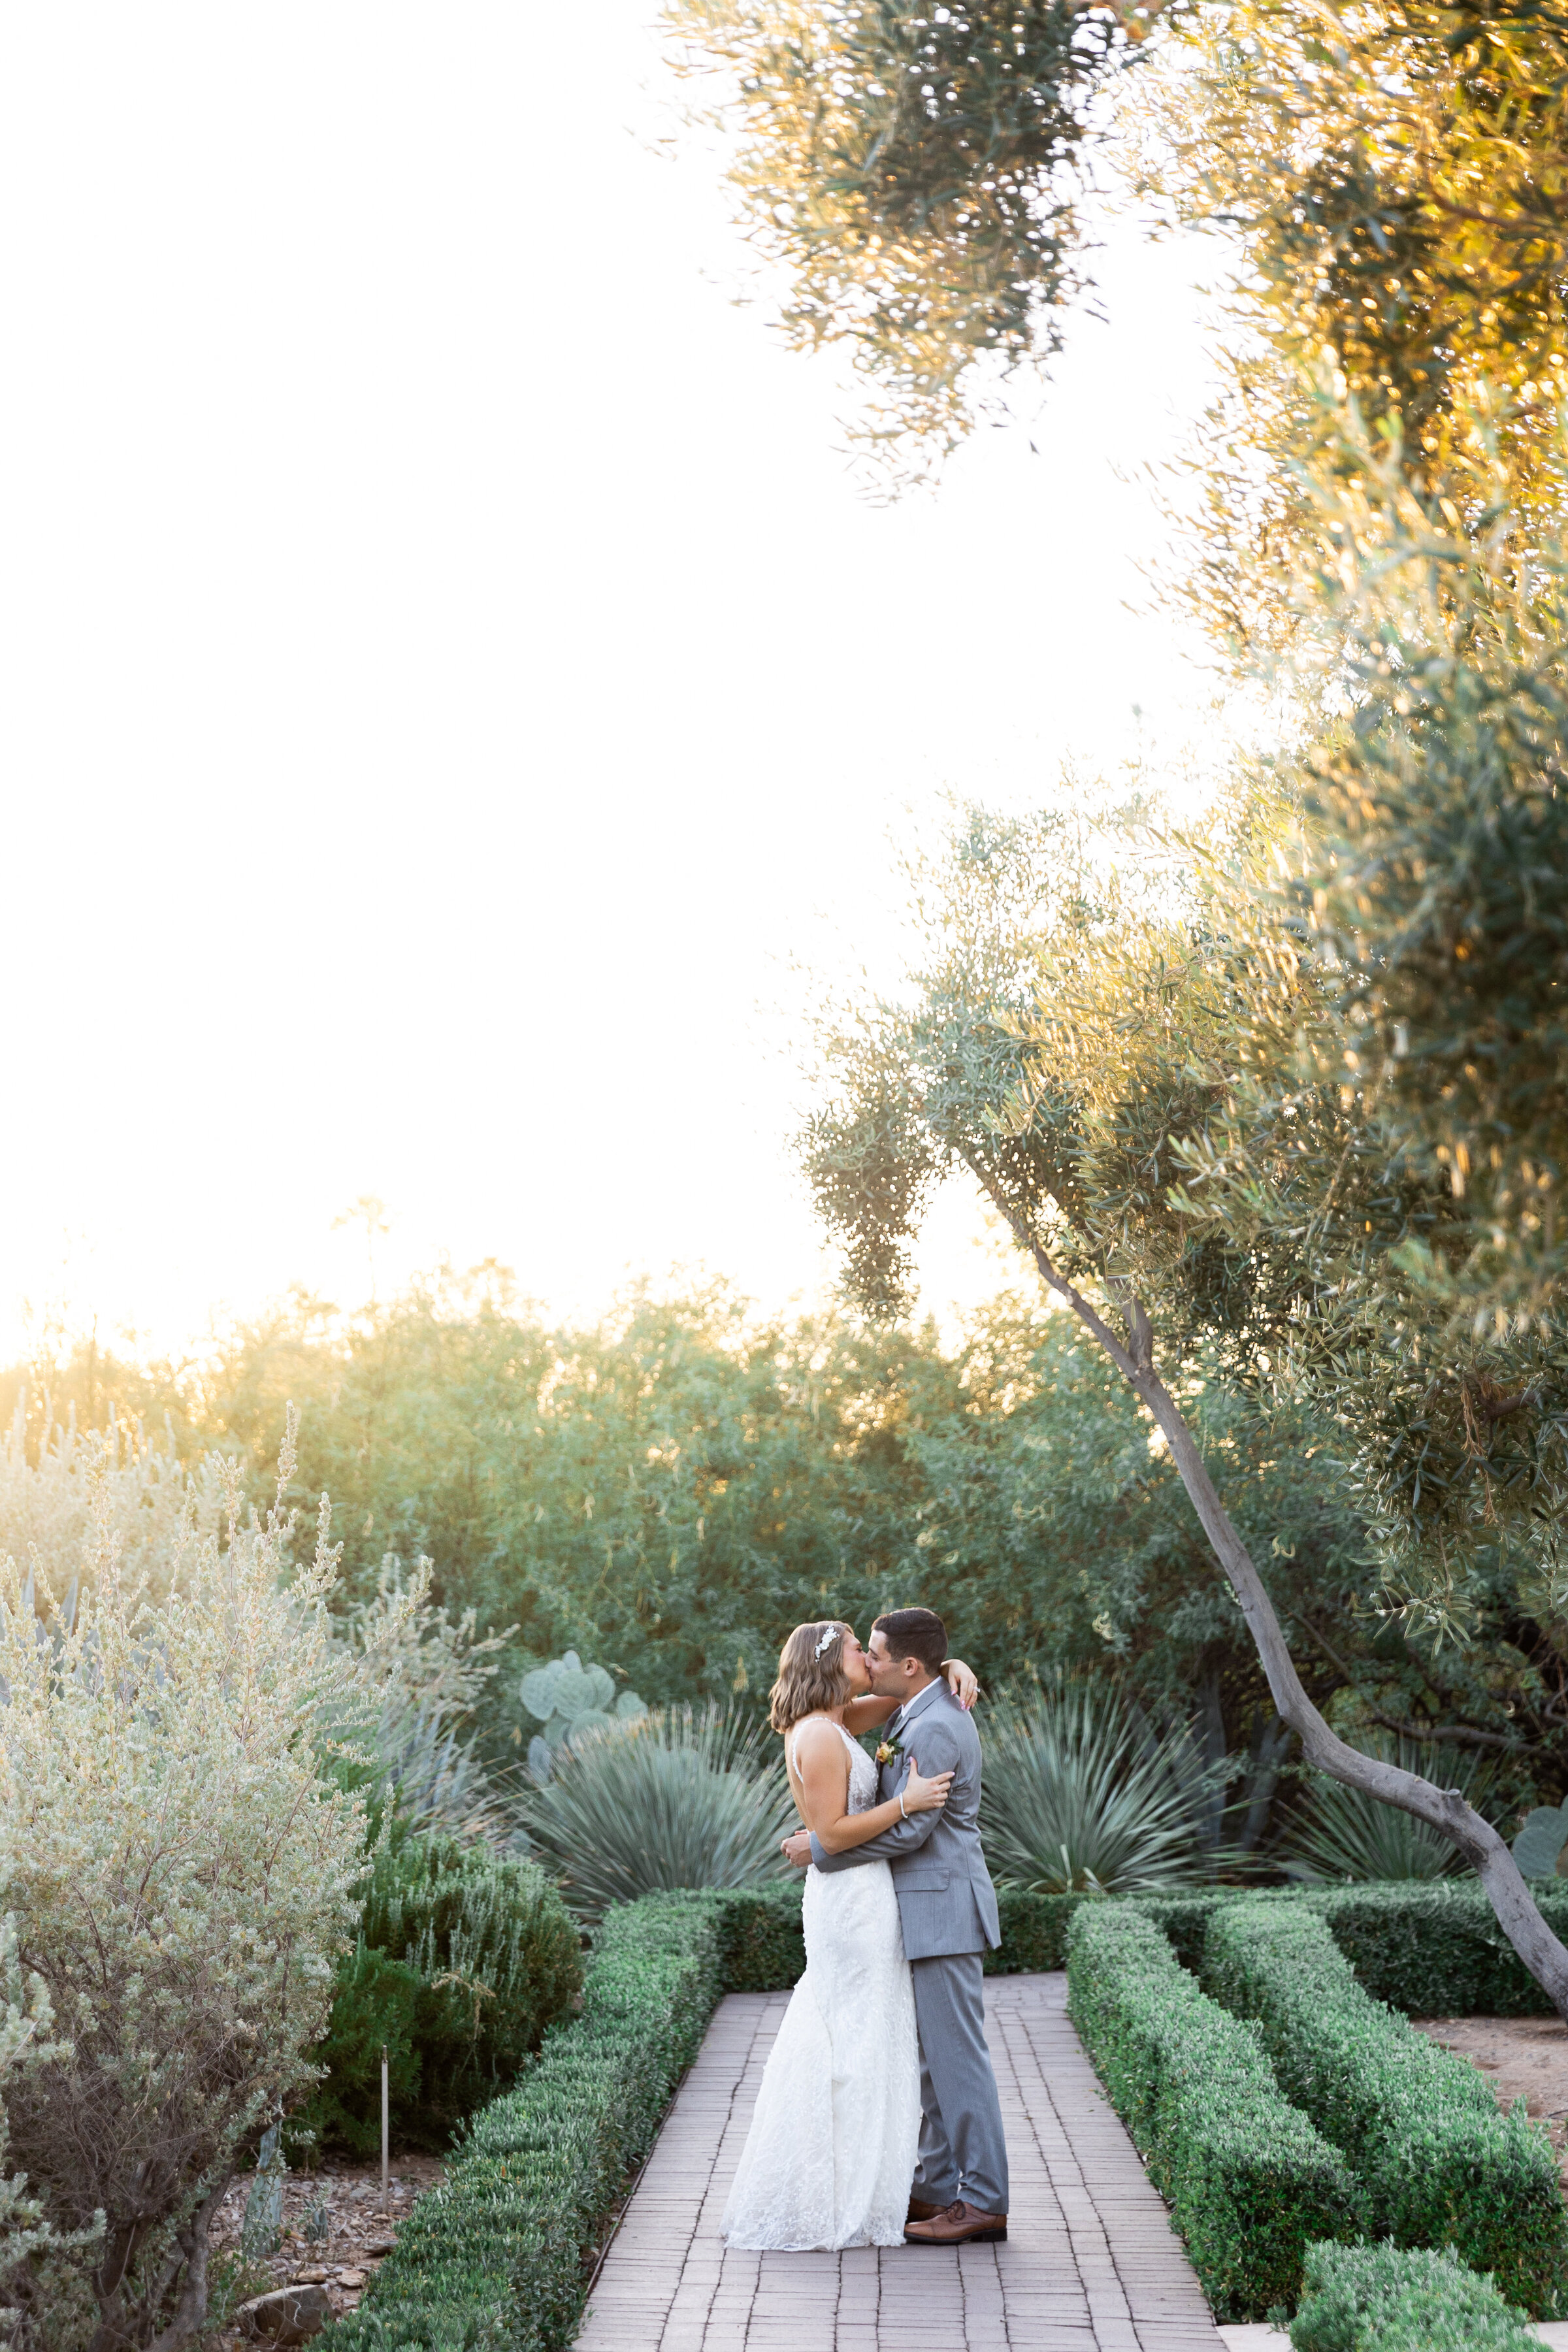 Karlie Colleen Photography - Emily & Mike - Wedding Sneak Peek - El Chorro - Arizona - Revel Wedding Co-305